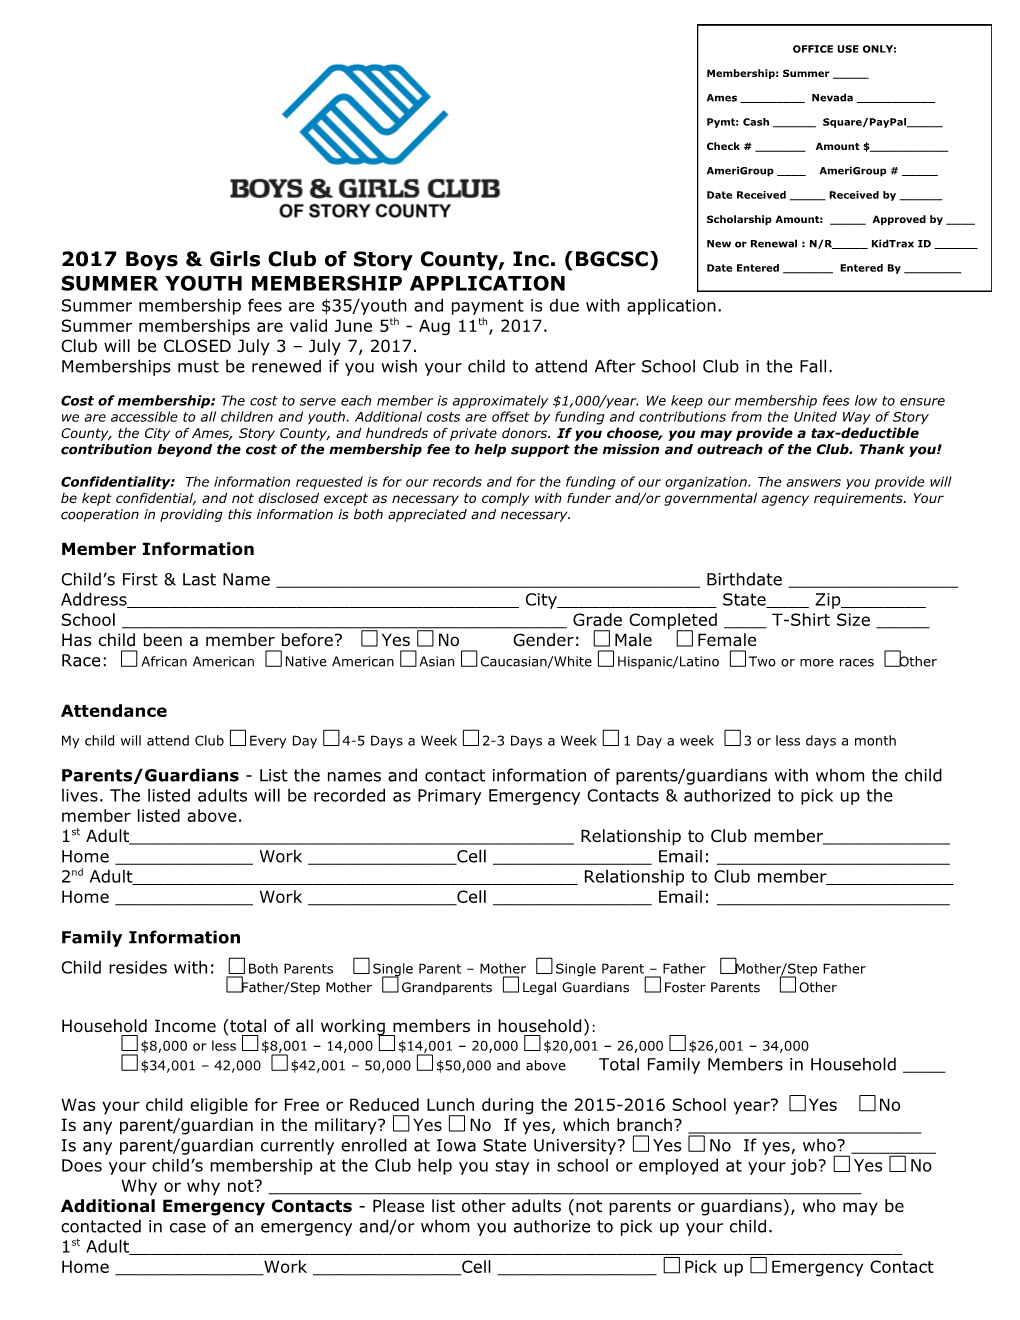 2007 Youth Membership Application